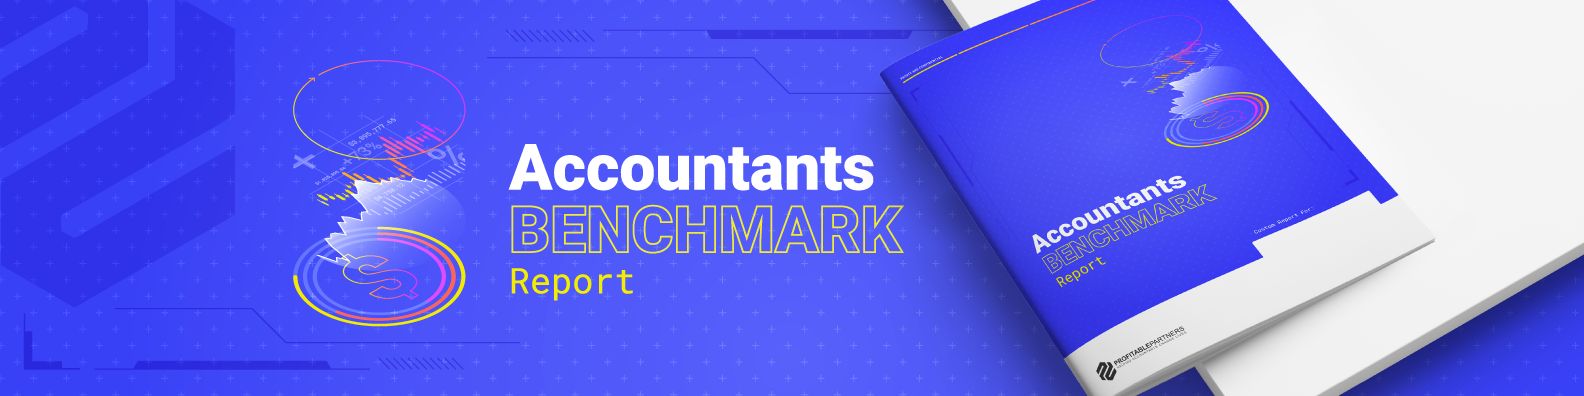 Accountants Benchmark Report